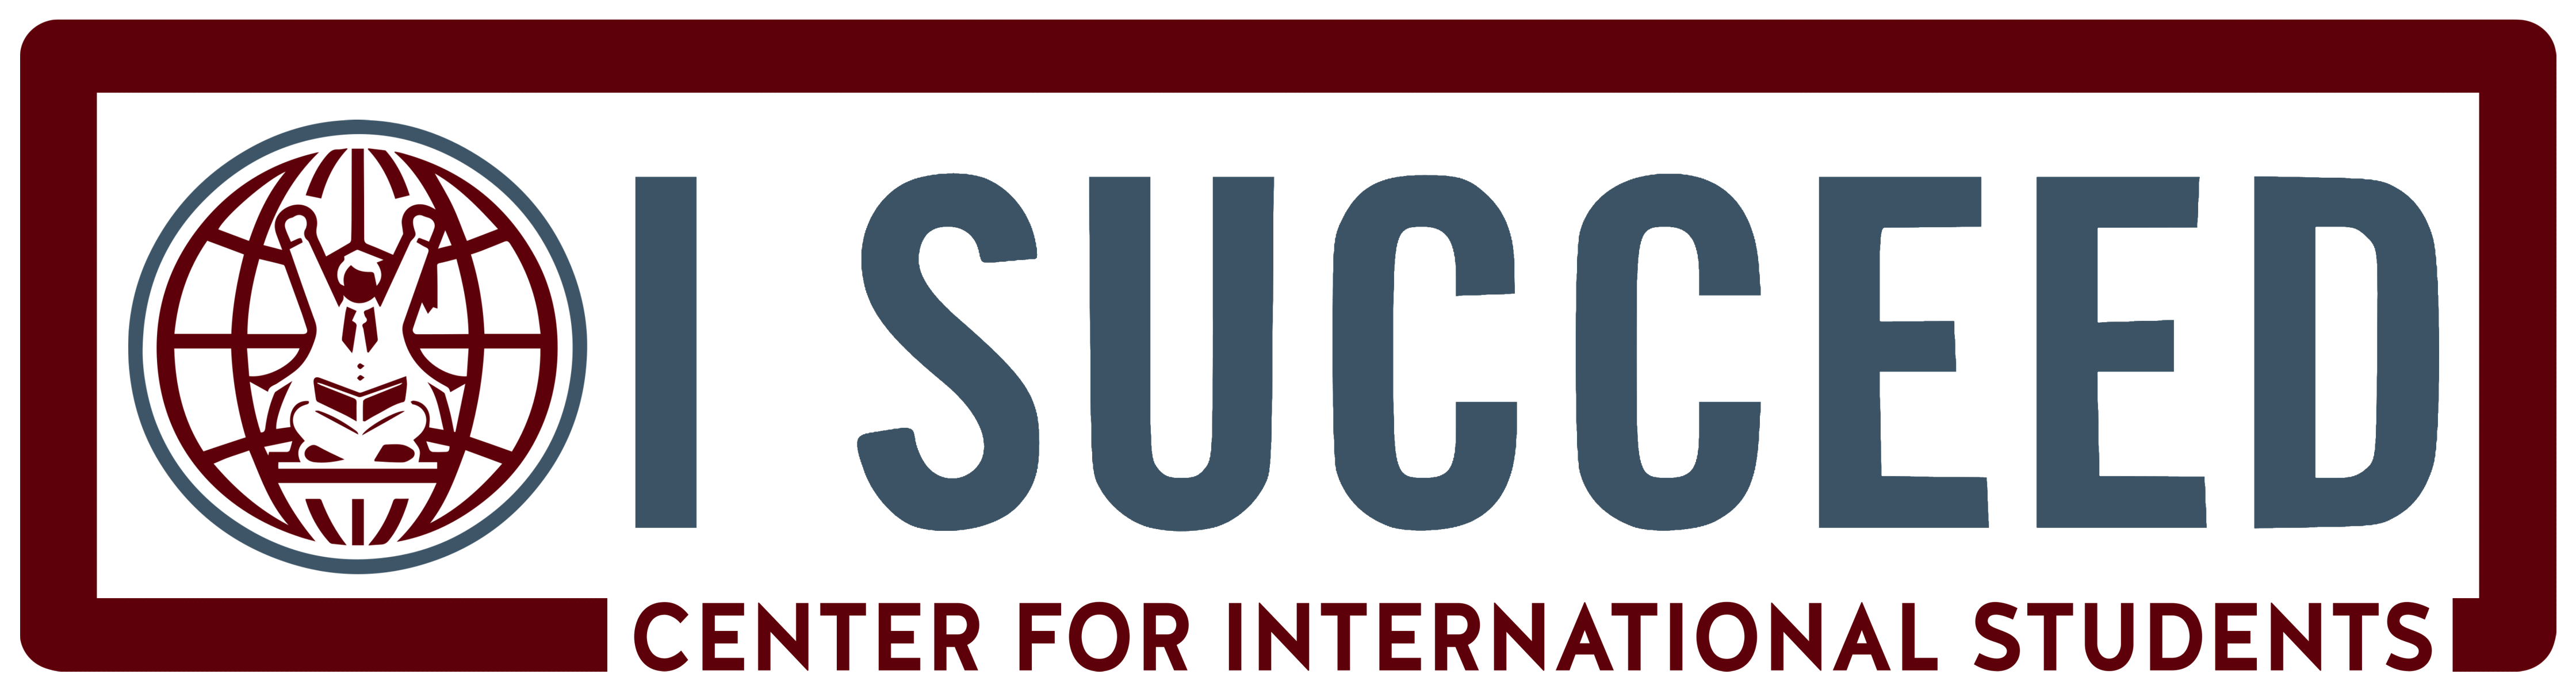 I Succeed Center for International Students logo